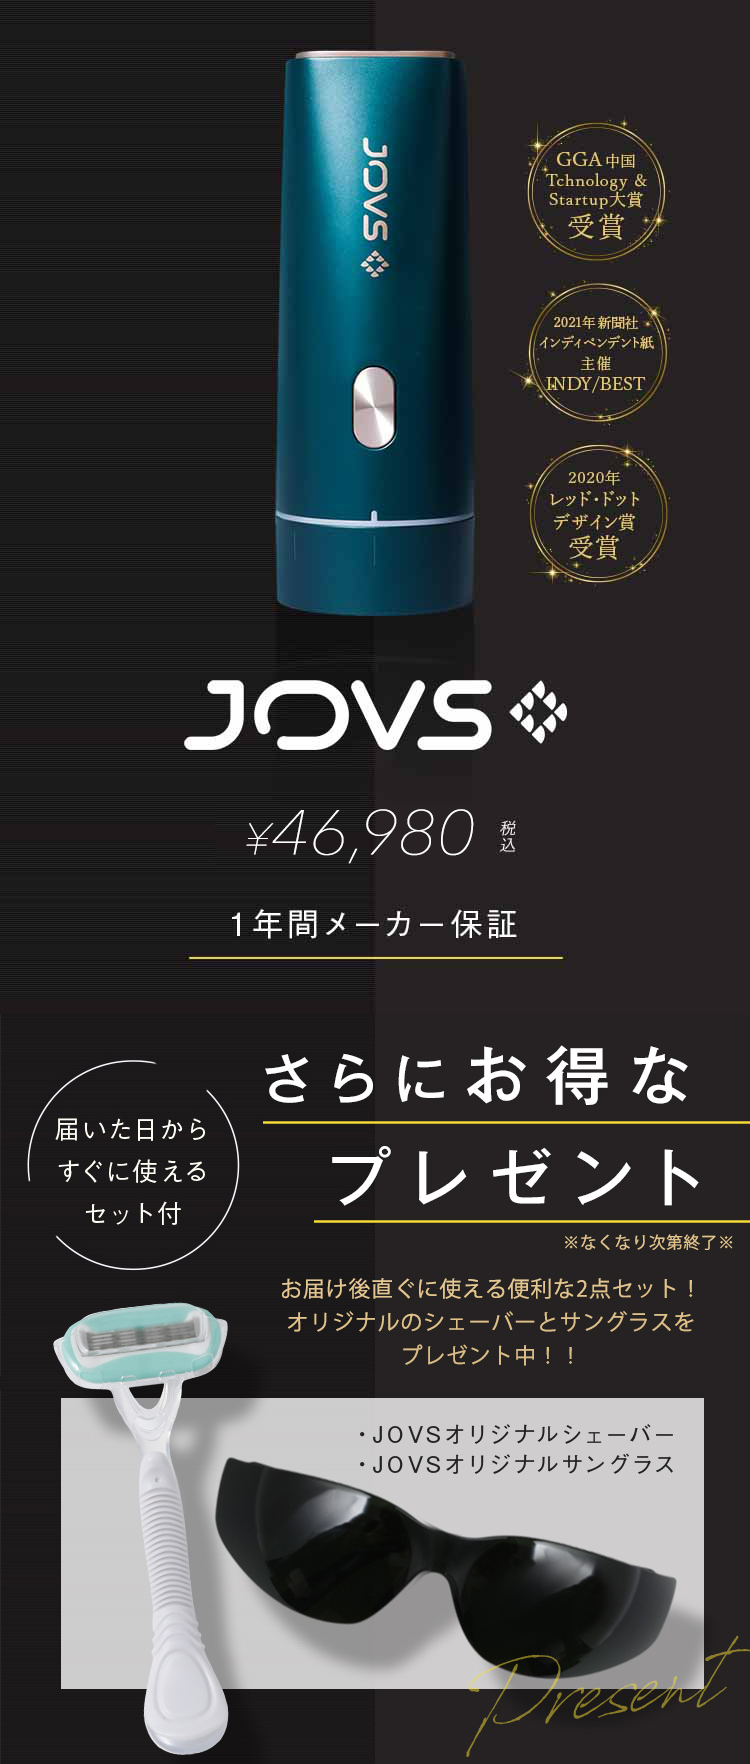 JOVS 公式 脱毛器 JOVS Dora 最新 ランキング1位 世界3冠 150万